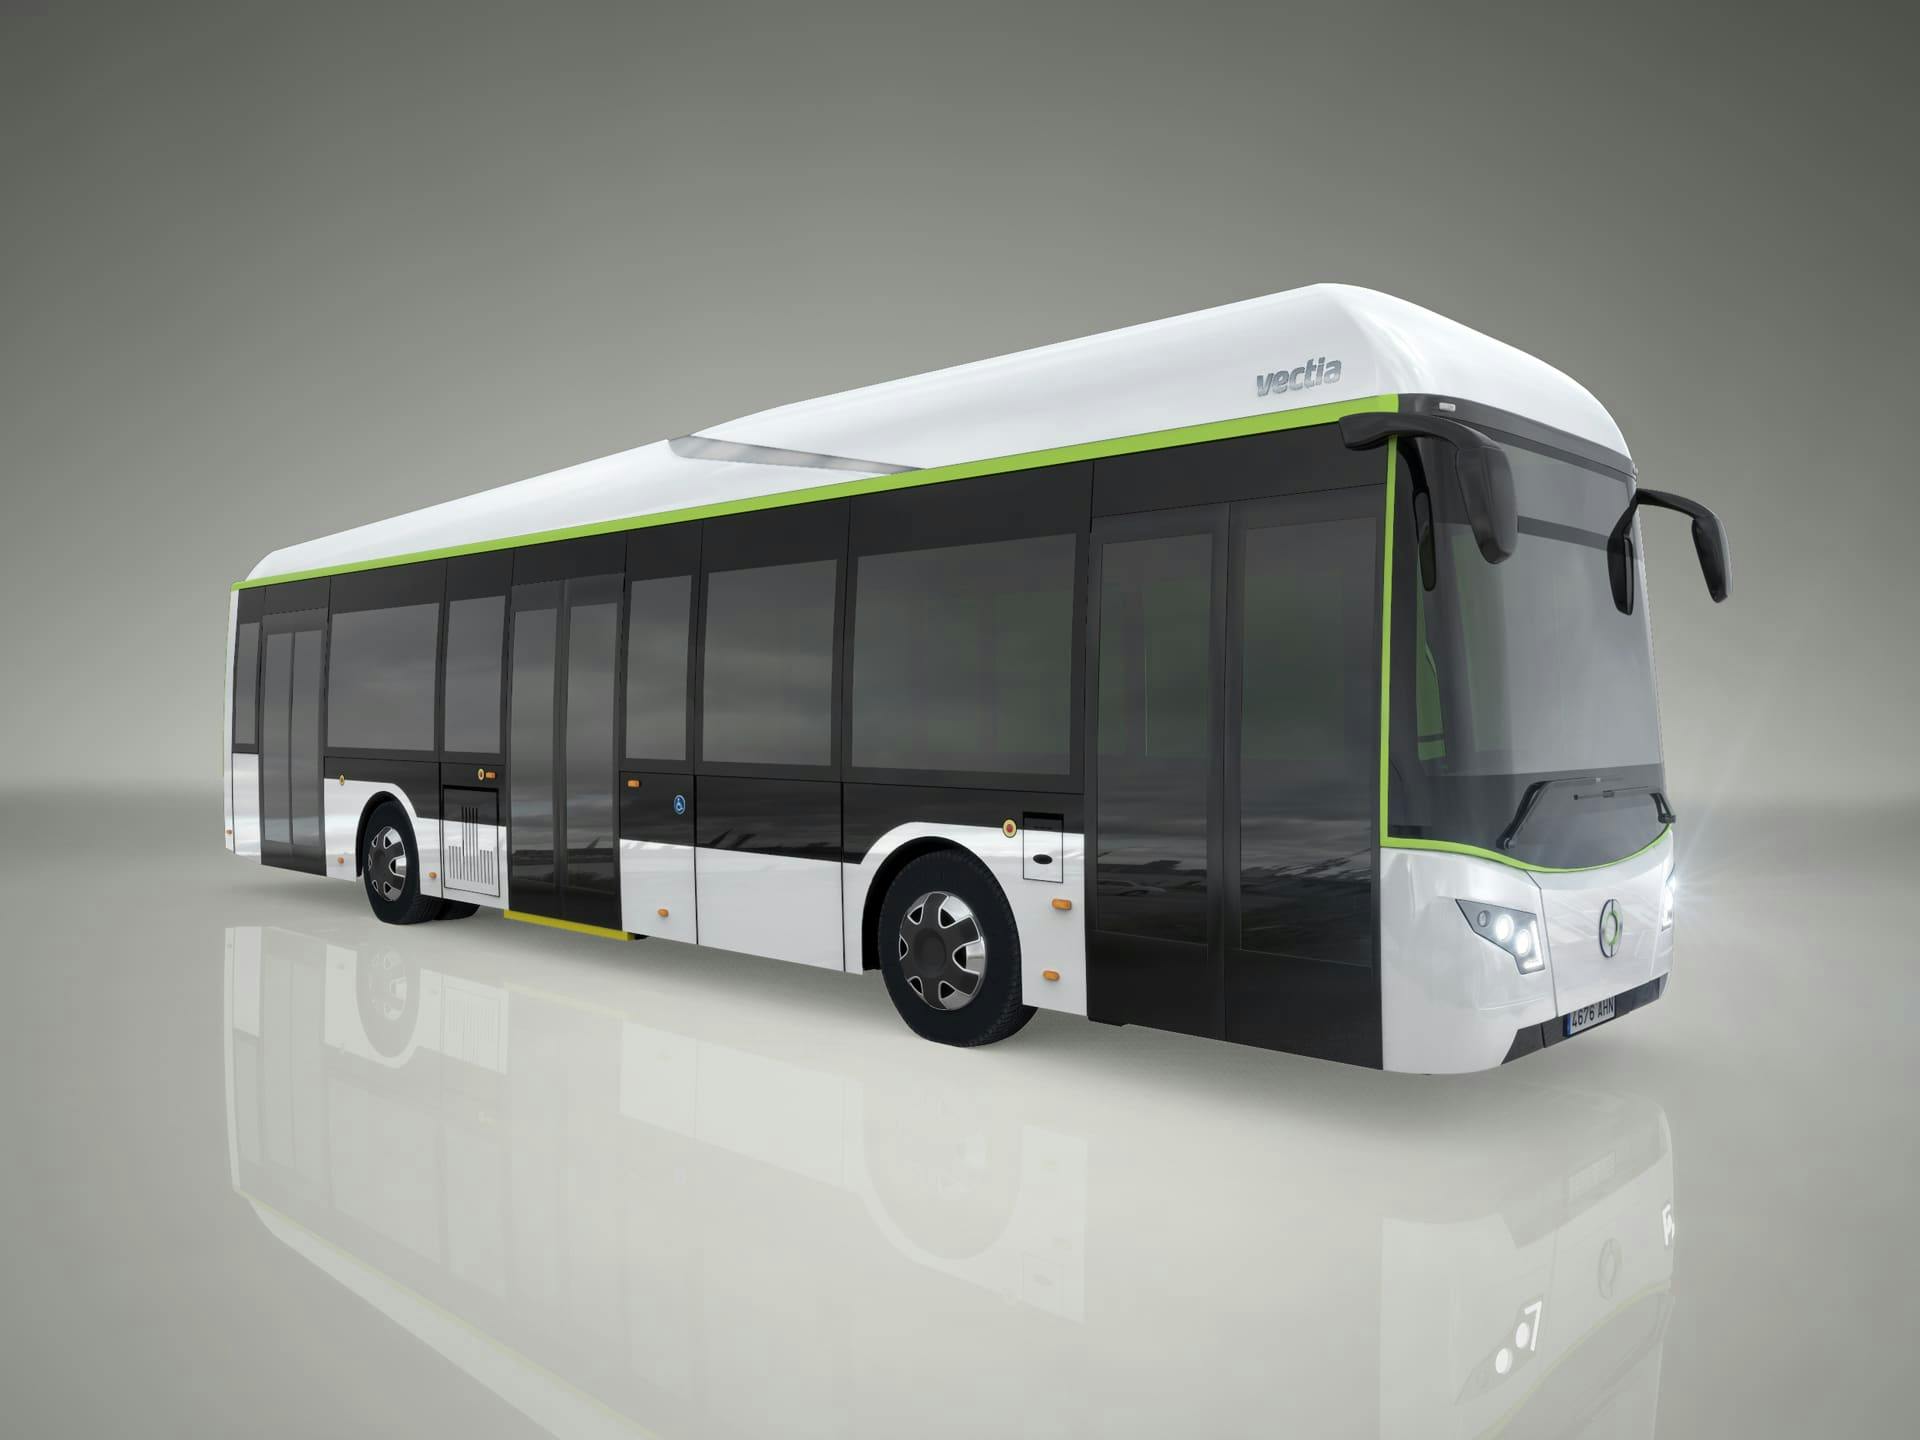 Imagen /content/autobus-castrosua/Neutro-Entrega.jpg del proyecto Autobus